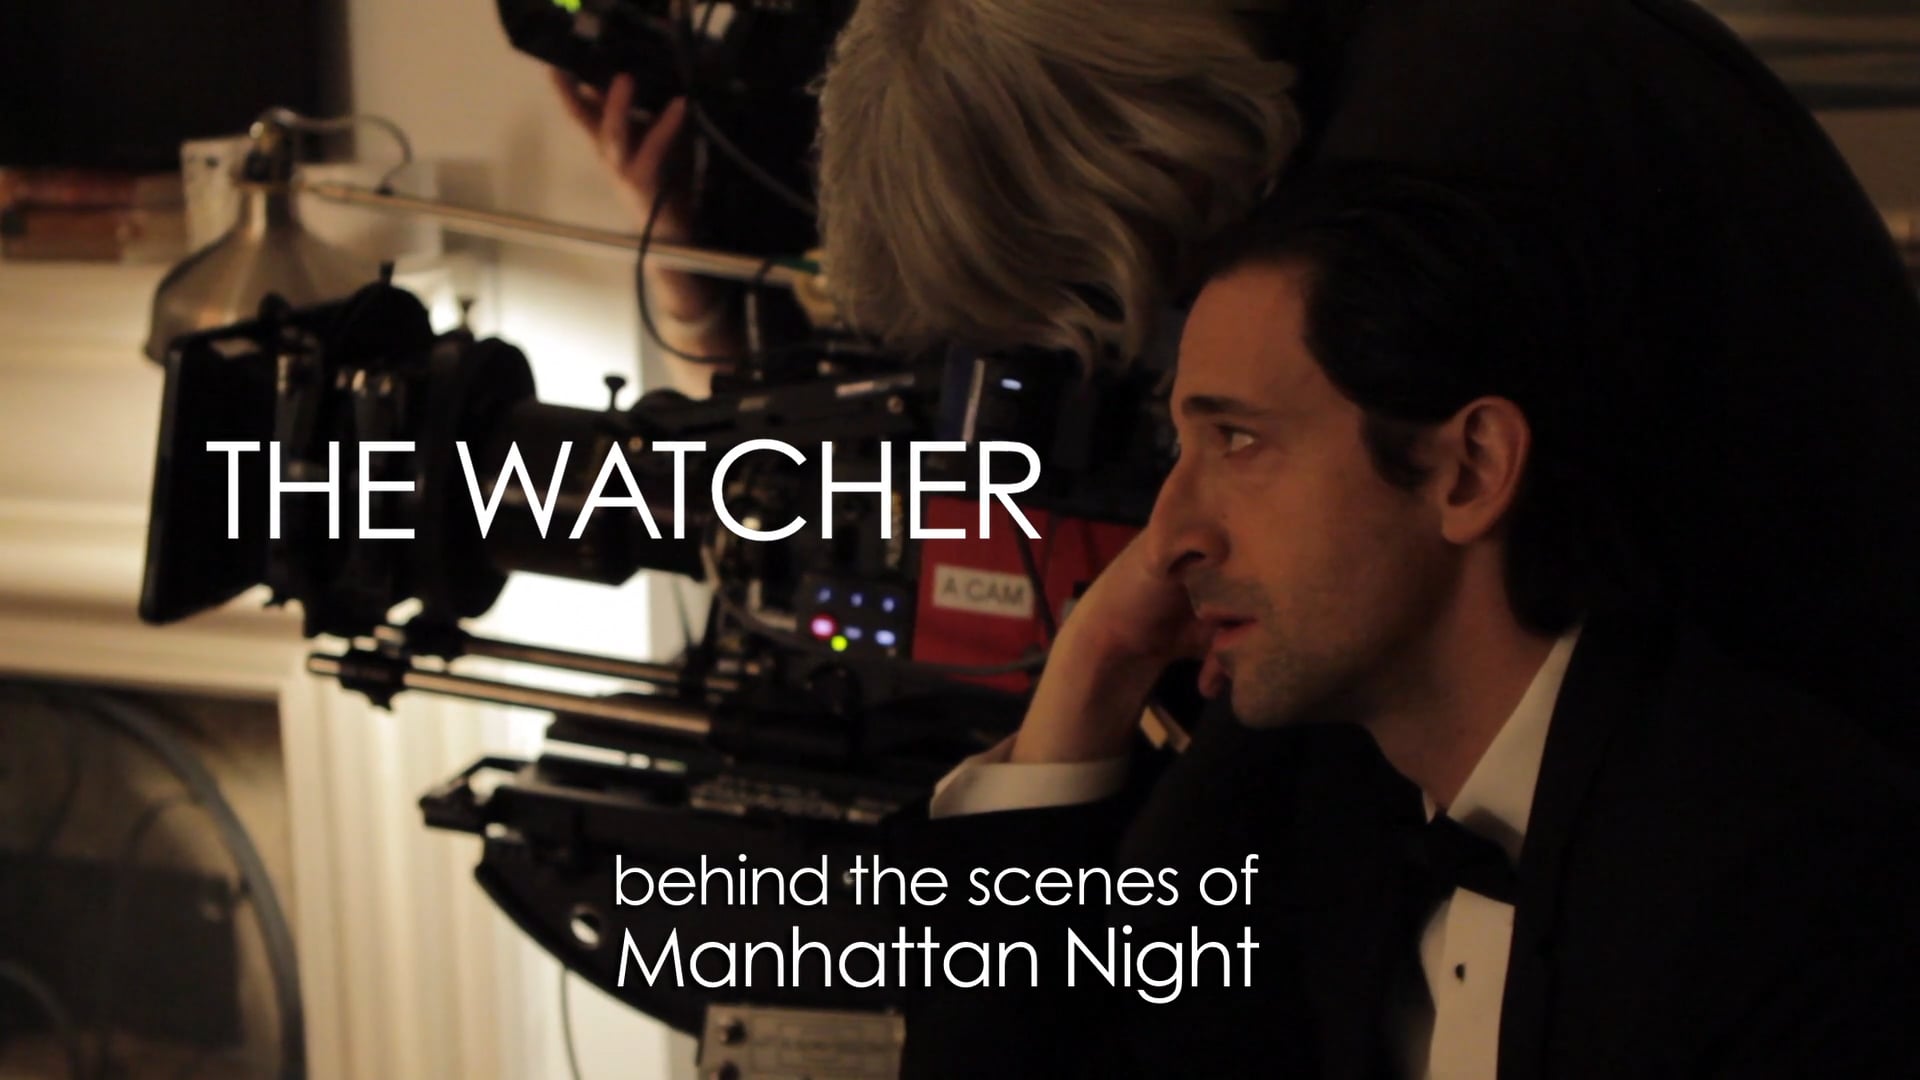 THE WATCHER: Behind the scenes of Manhattan Night